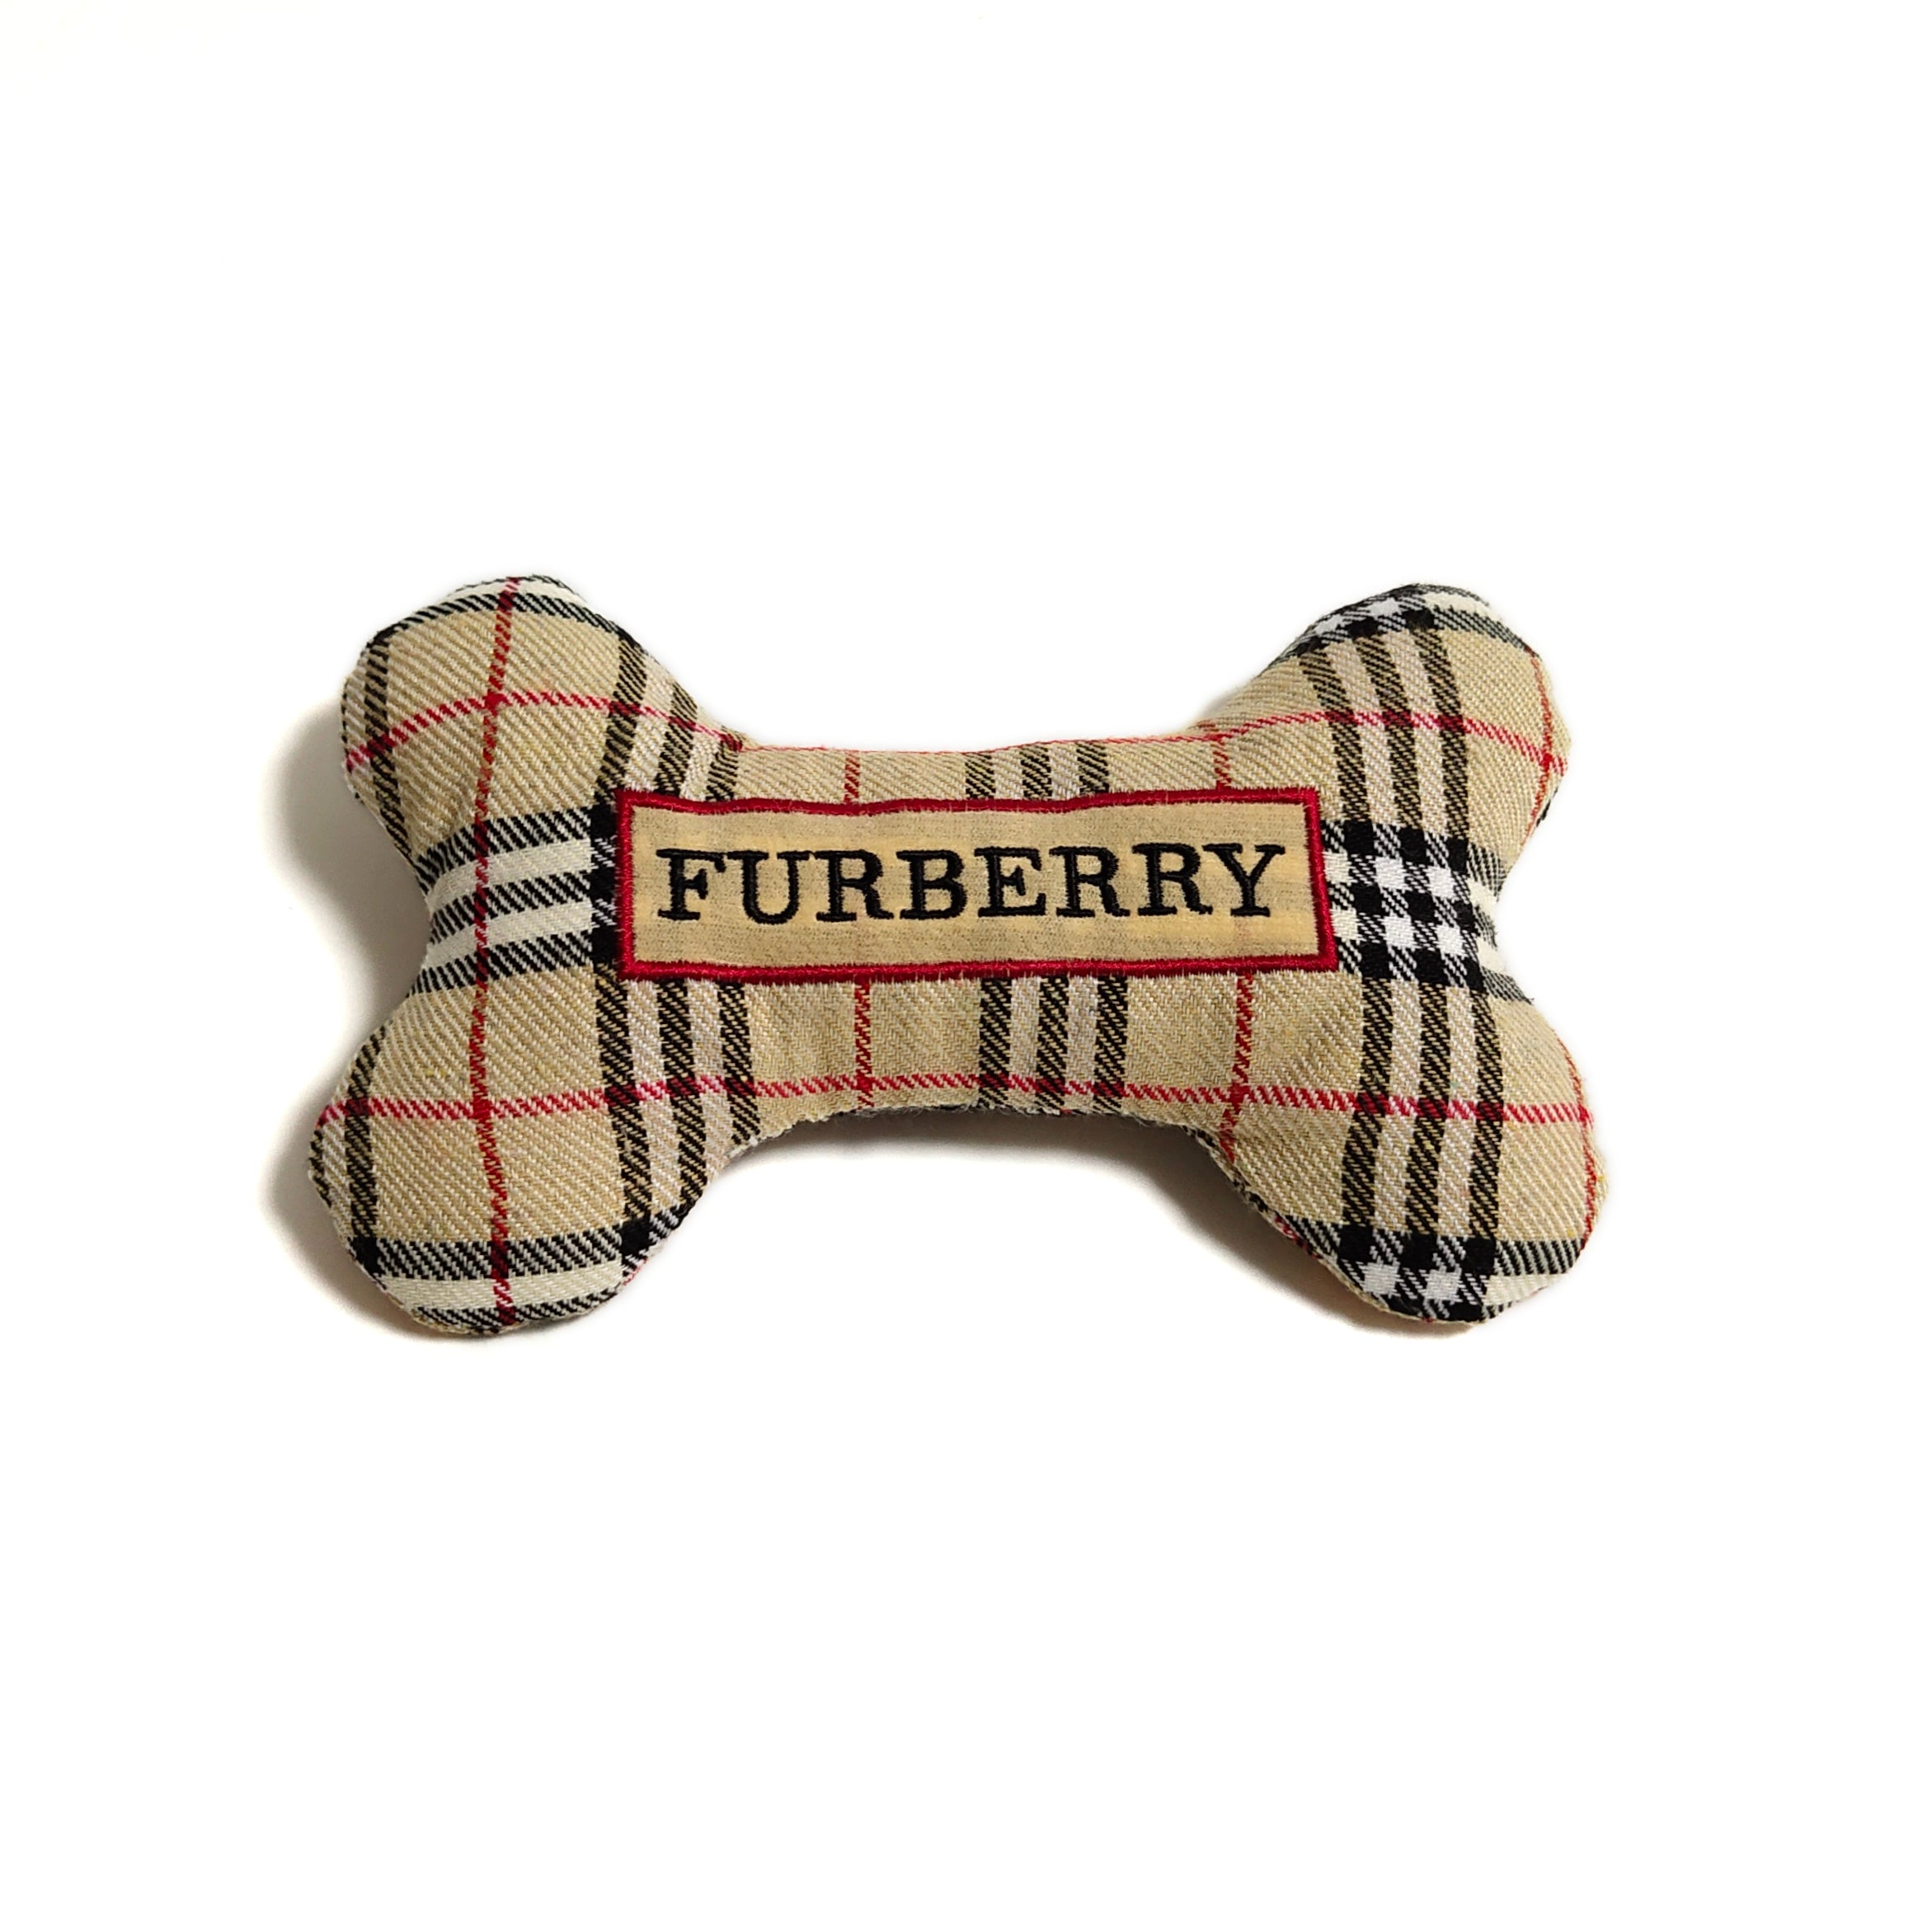 Furberry Bone Plush Dog Toy